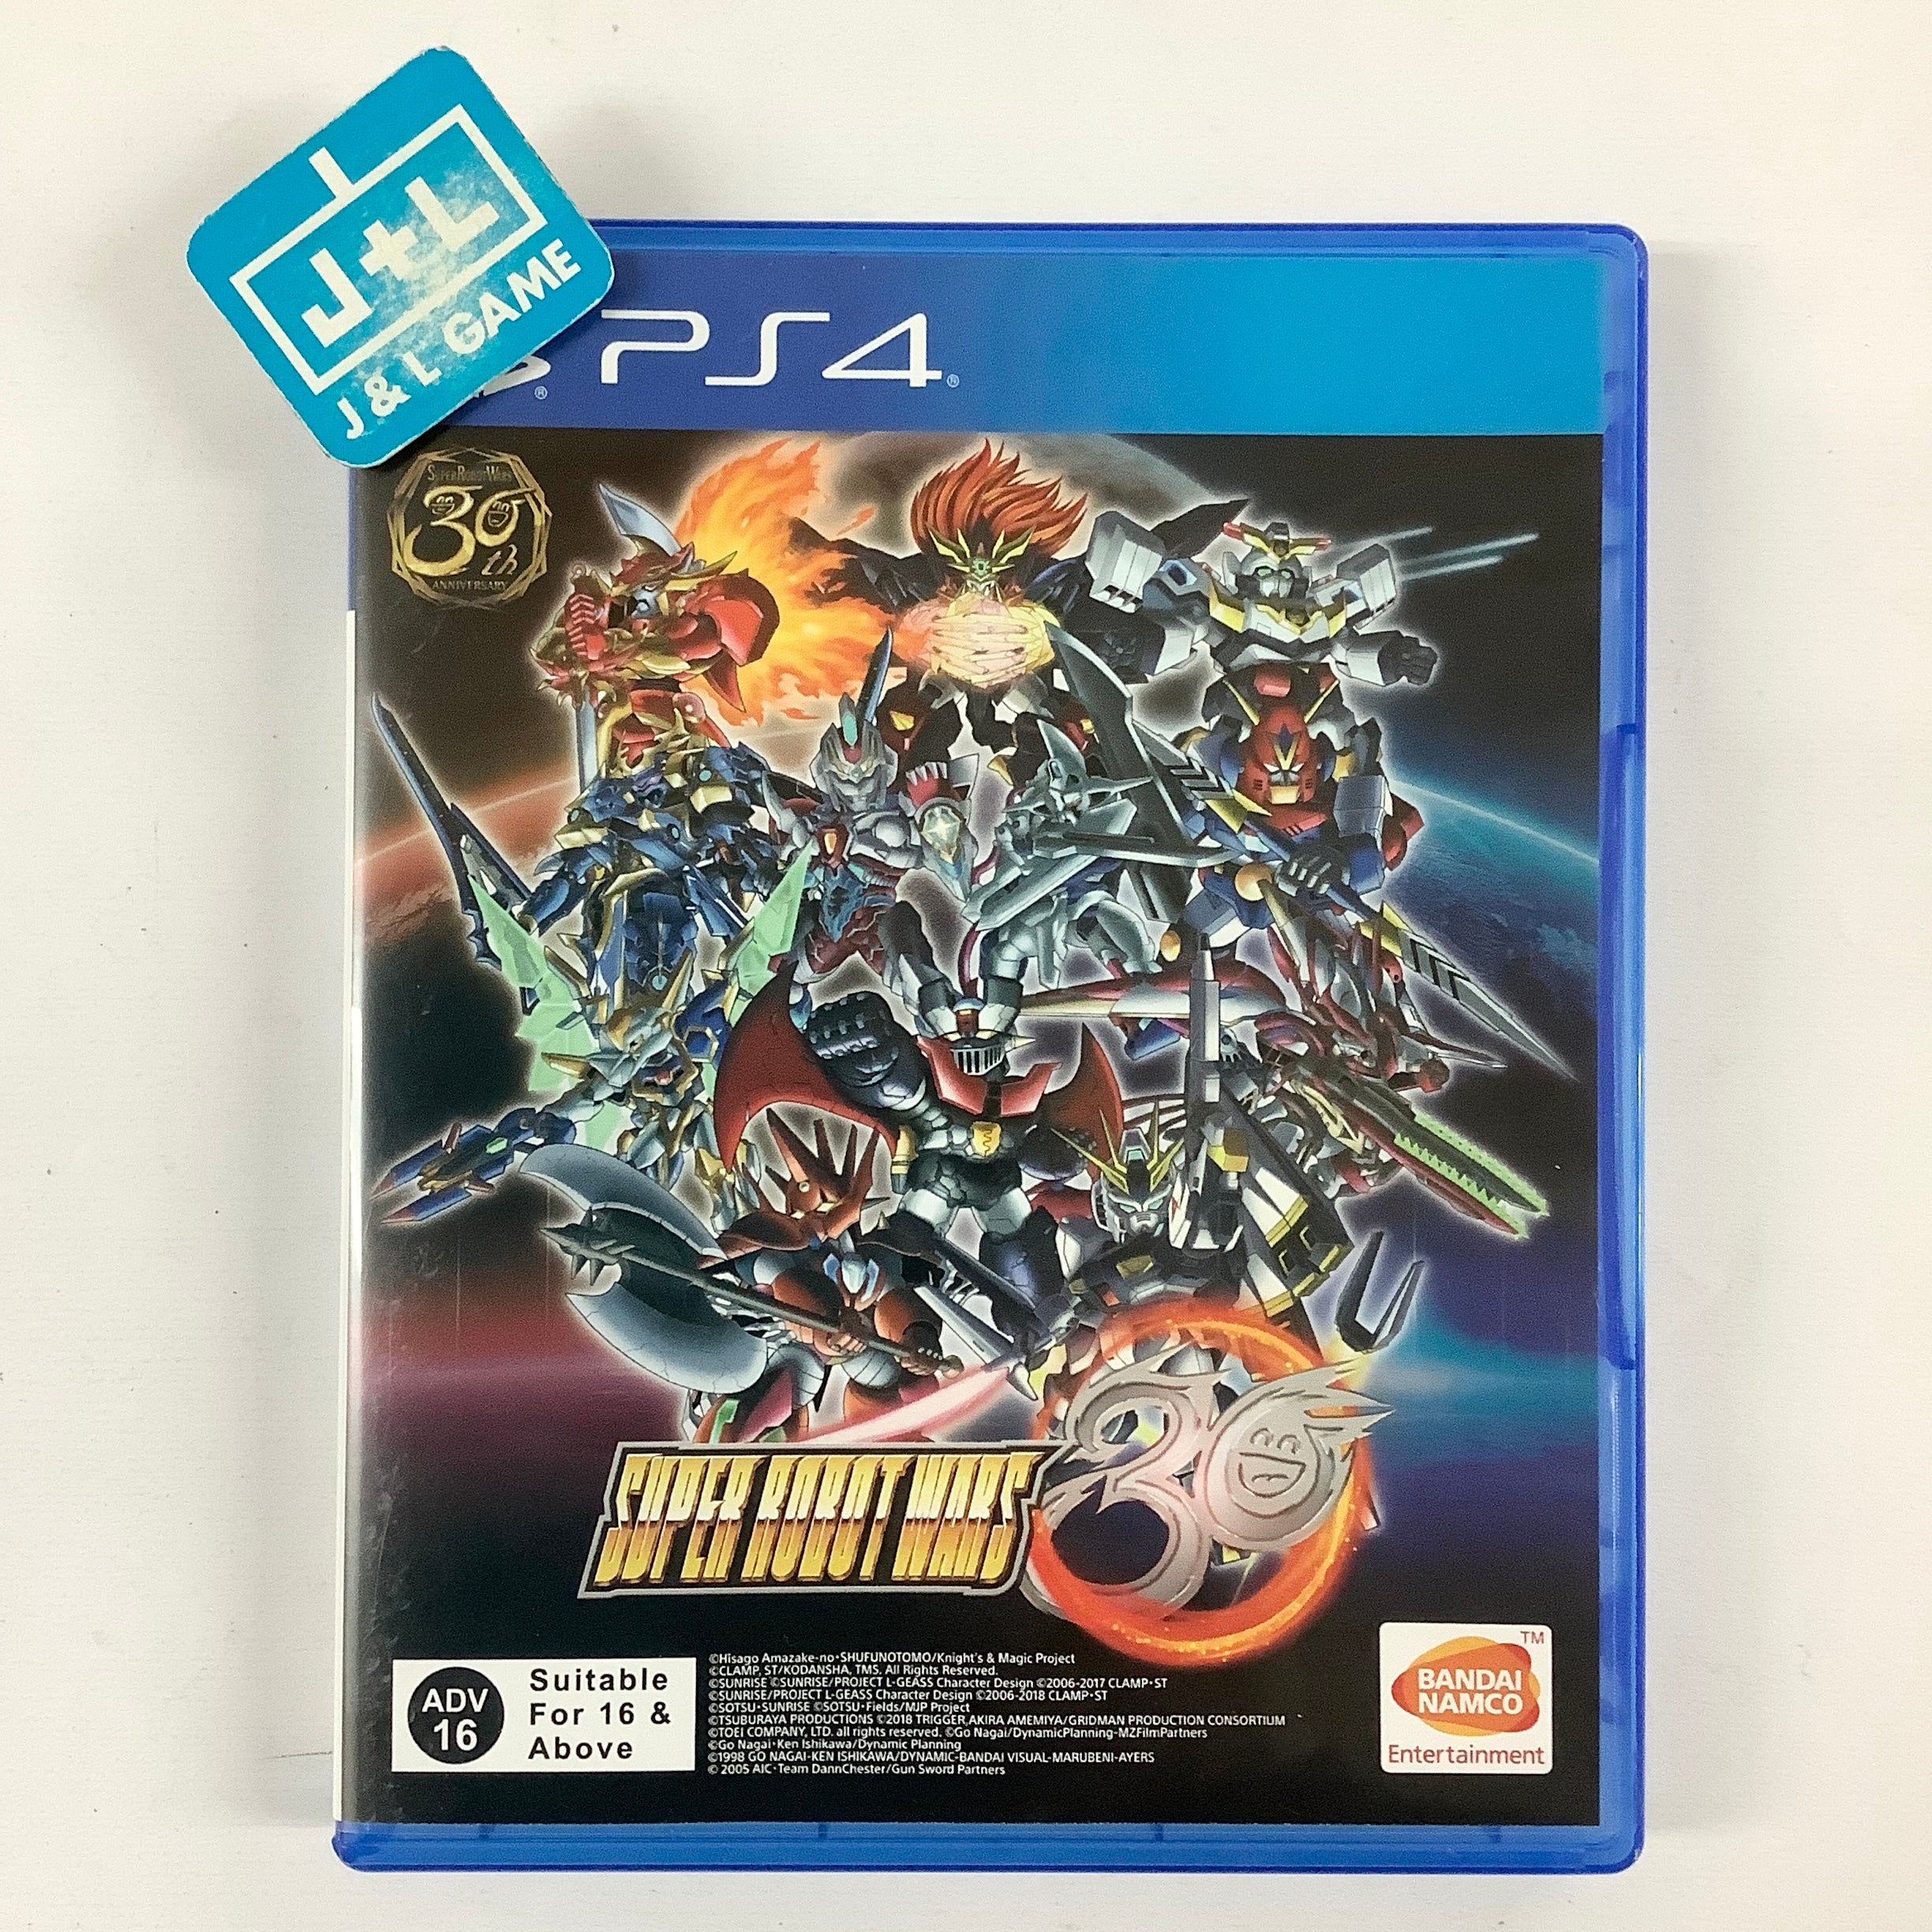 Super Robot Wars 30 (English Sub) - (PS4) PlayStation 4 [Pre-Owned] (Japanese Import) Video Games Bandai Namco Games   